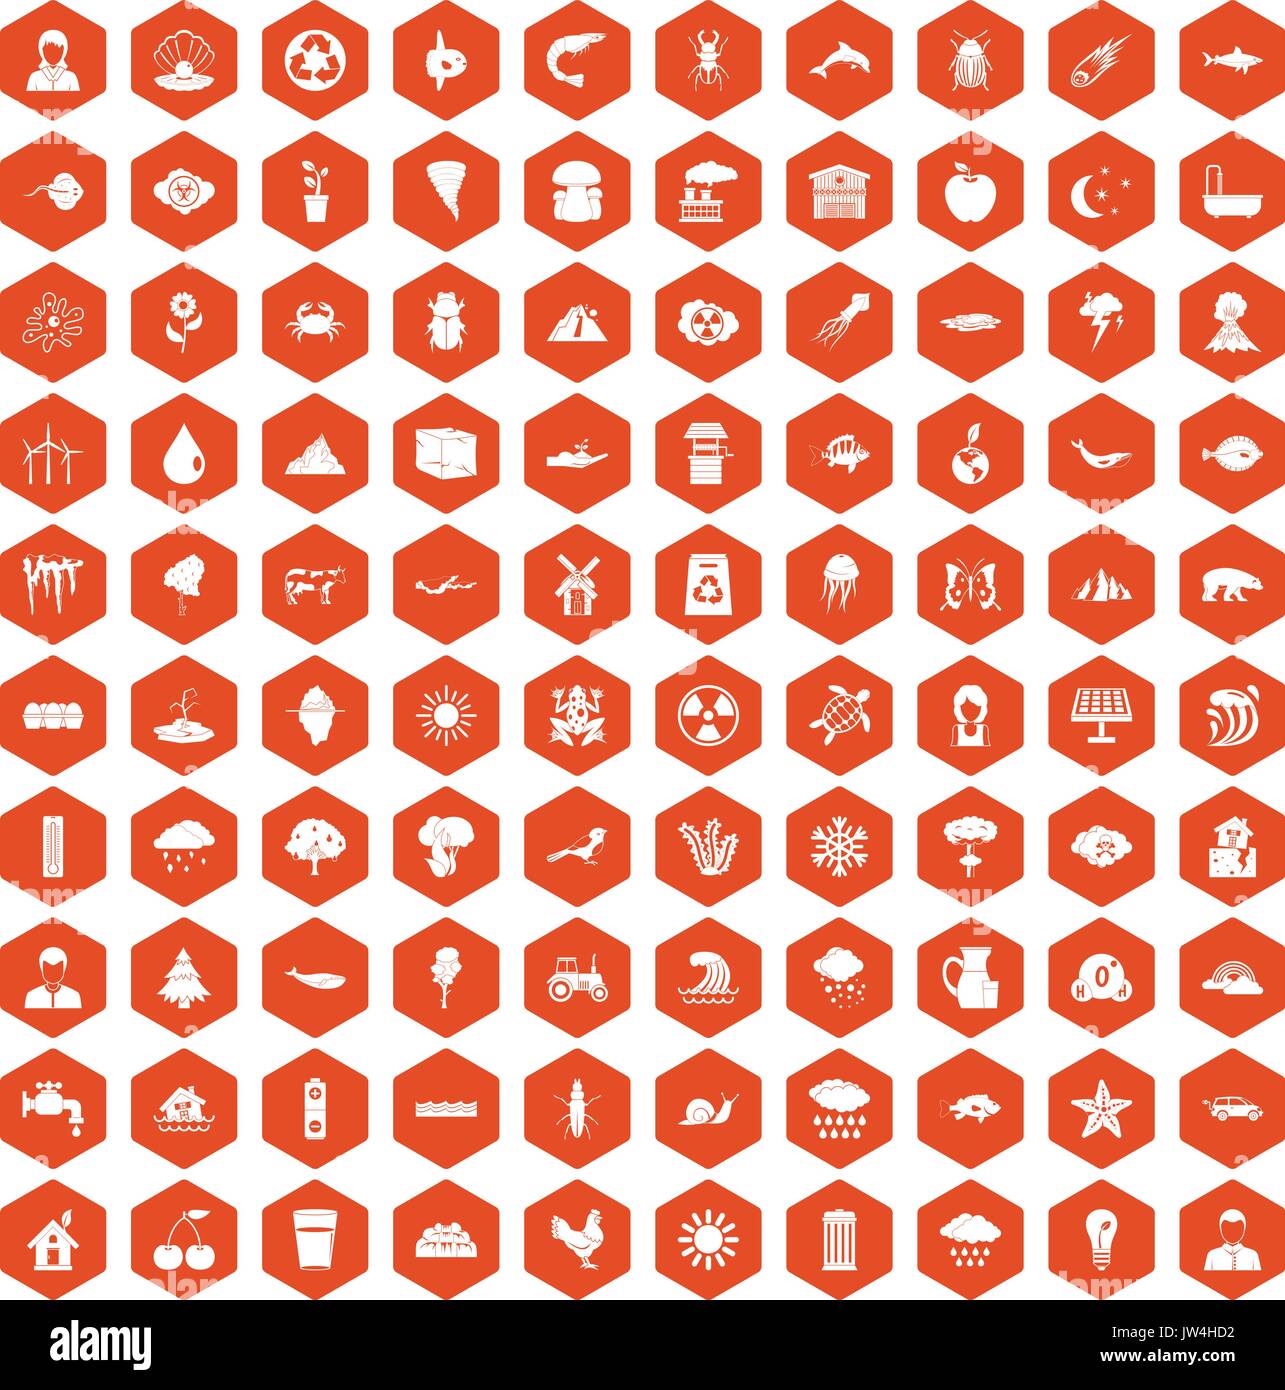 100 earth icons hexagon orange Stock Vector